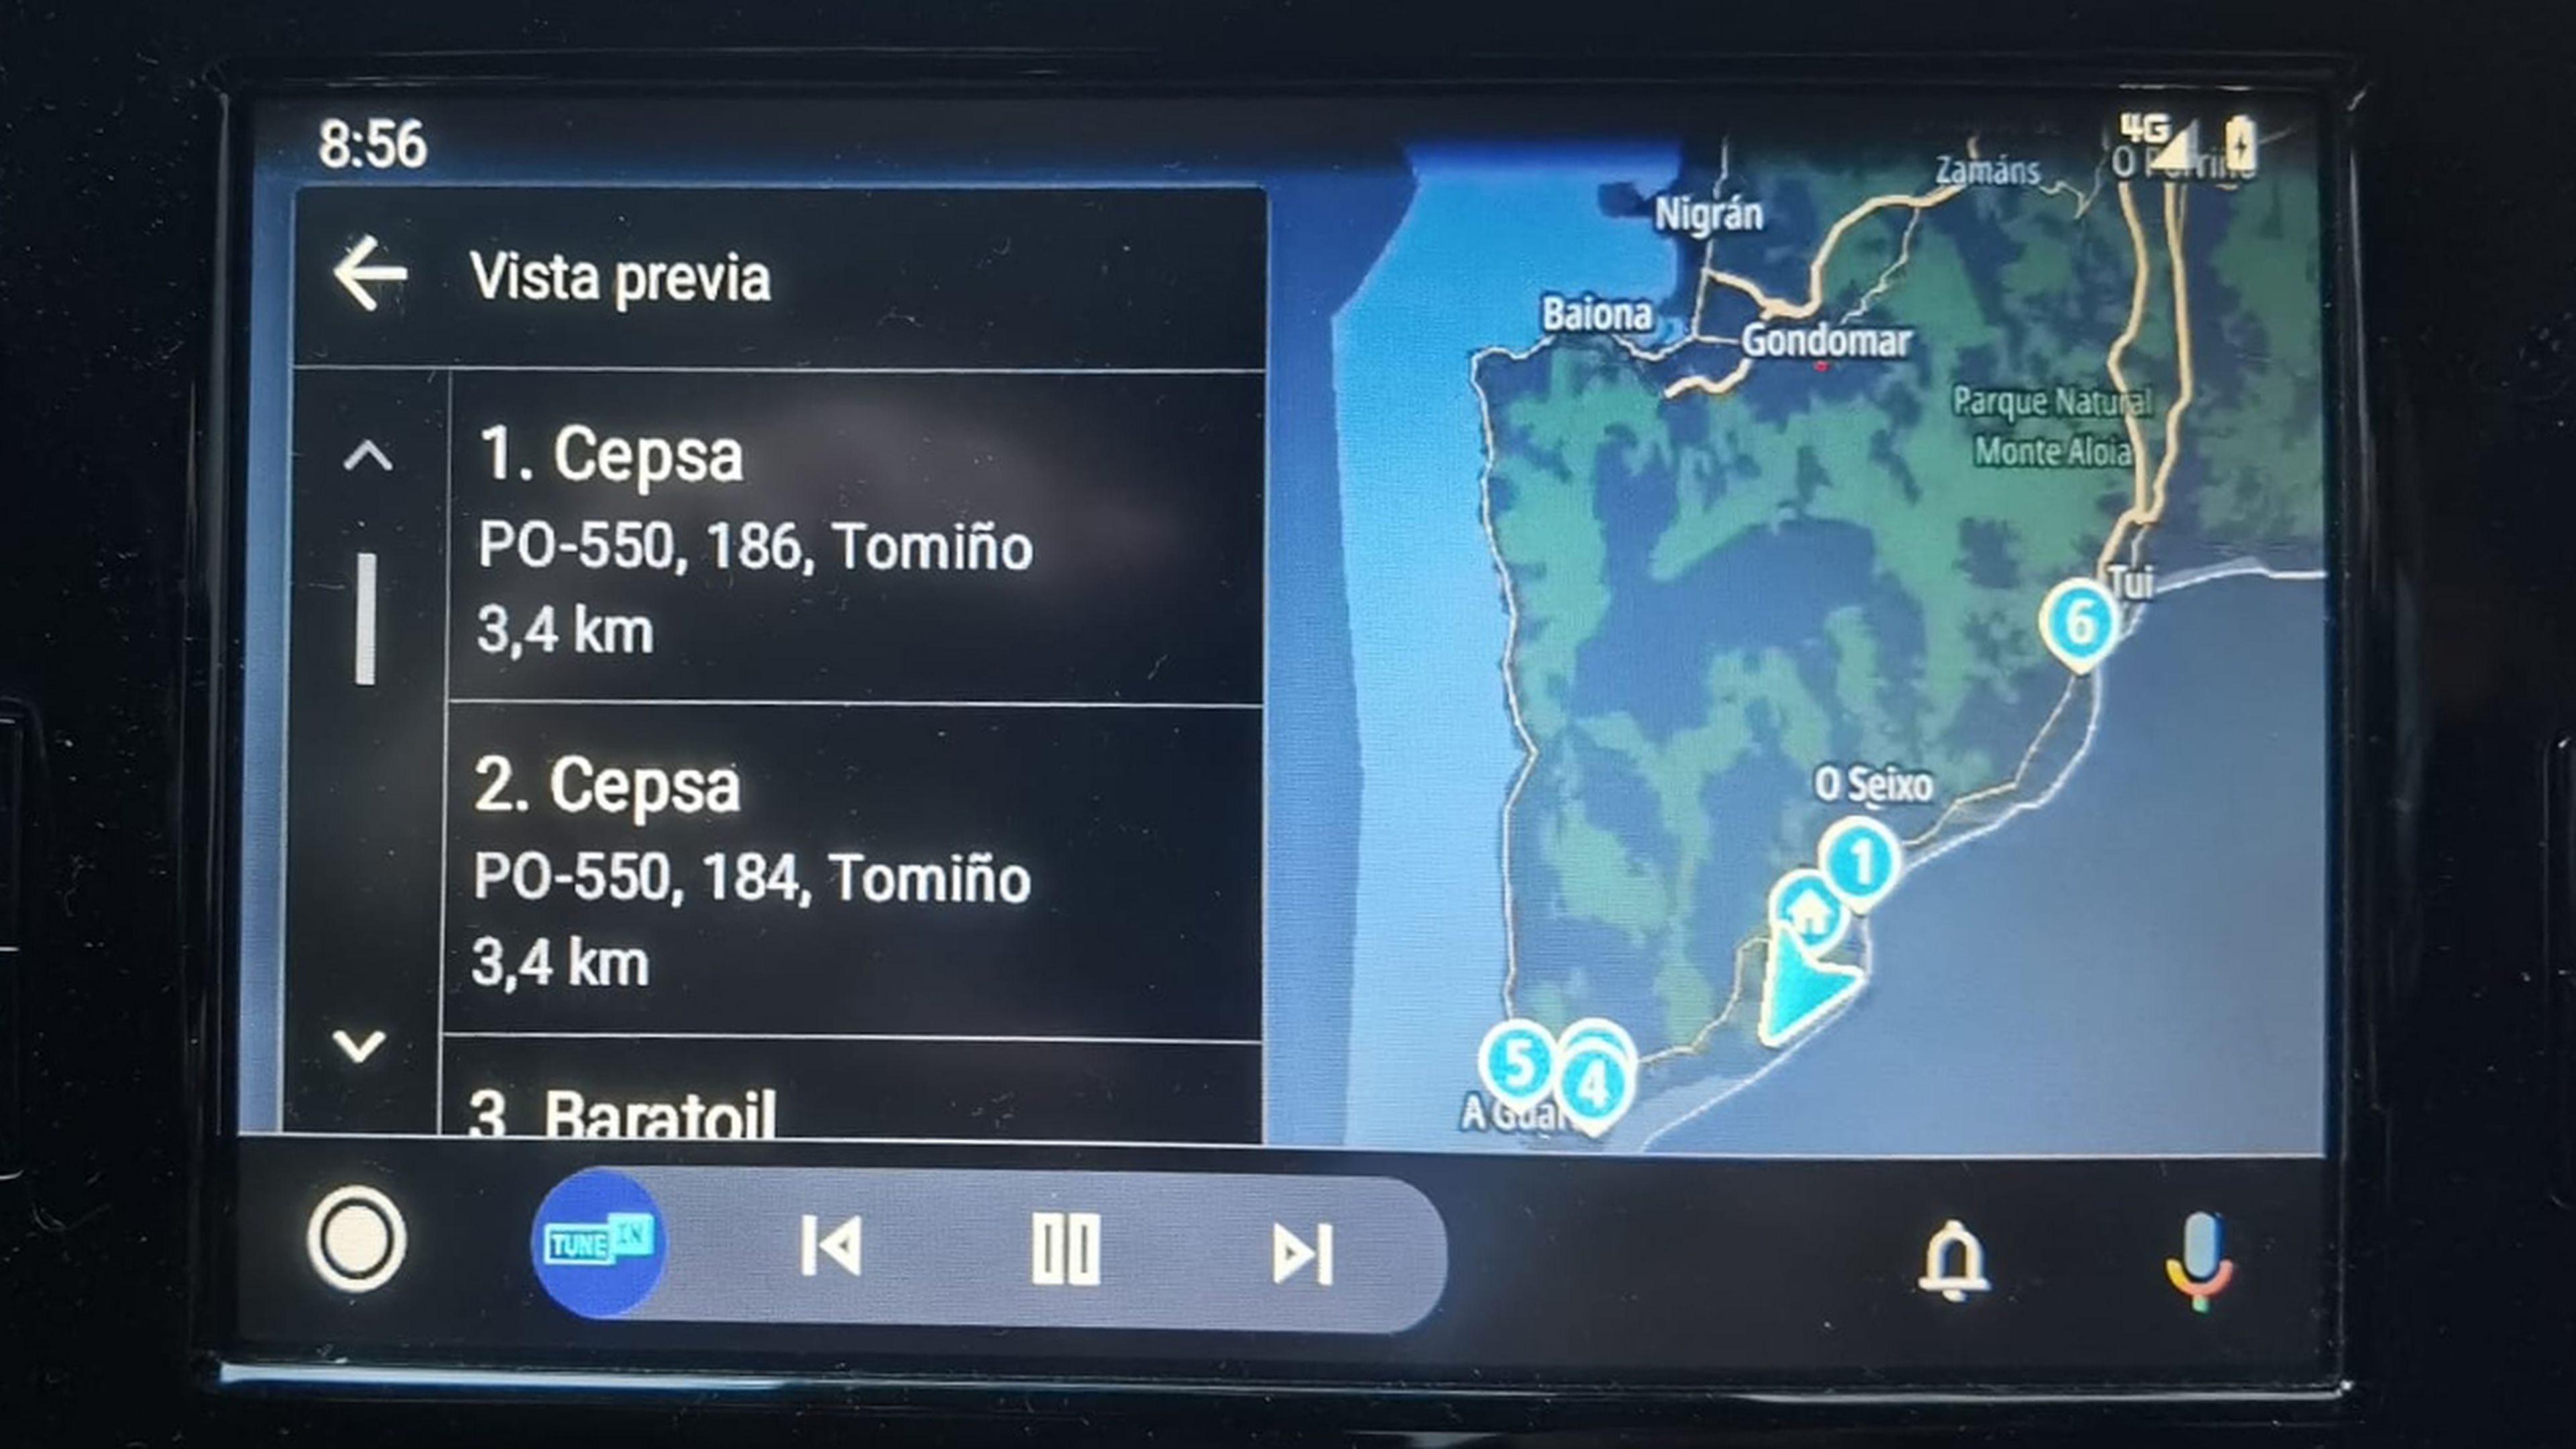 TomTom Navigation Android Auto Gasolineras